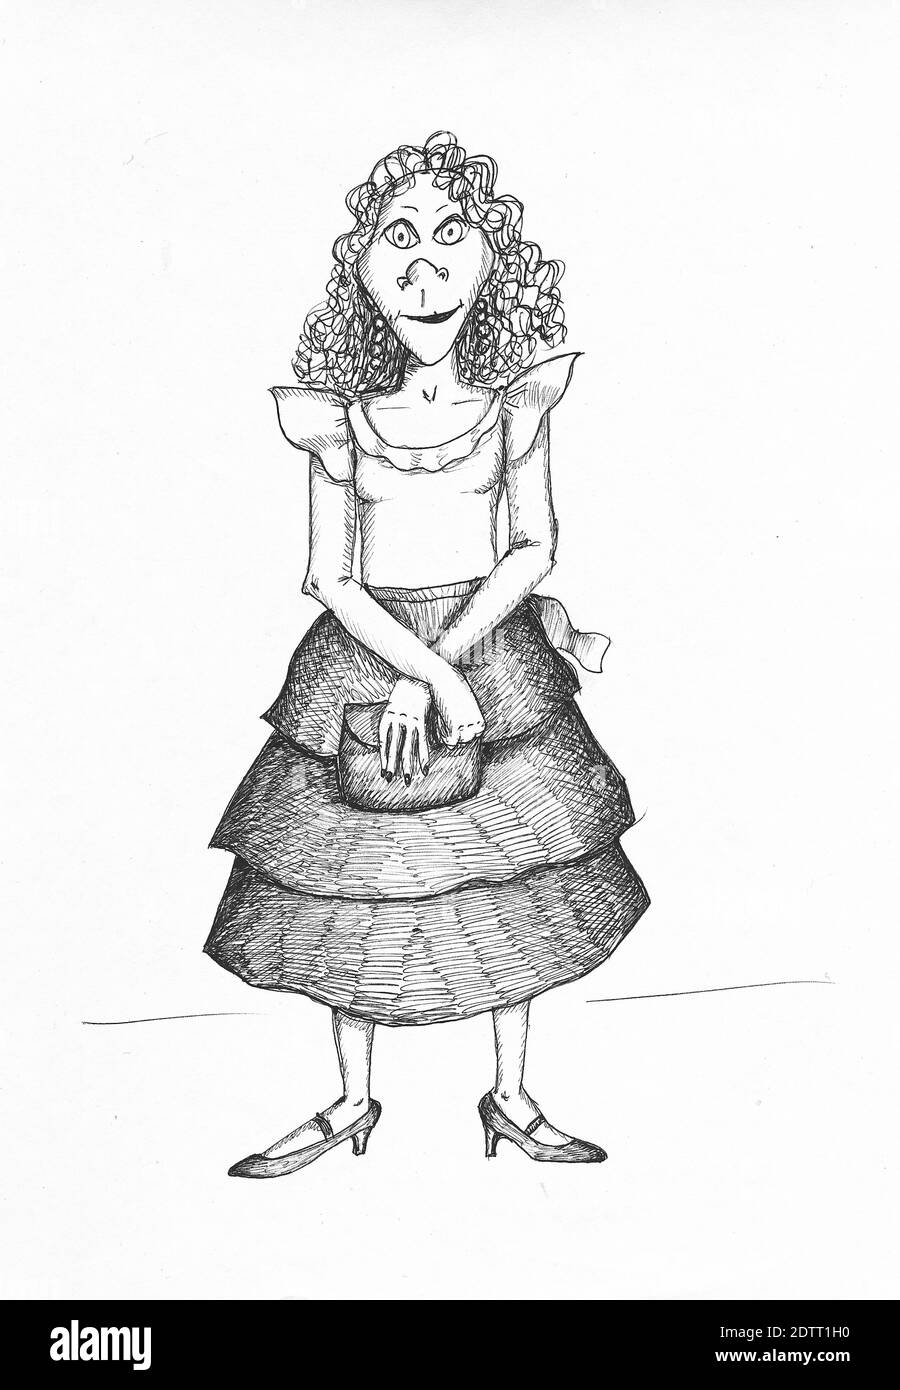 Woman wearing a flounce dress. Illustration. Stock Photo